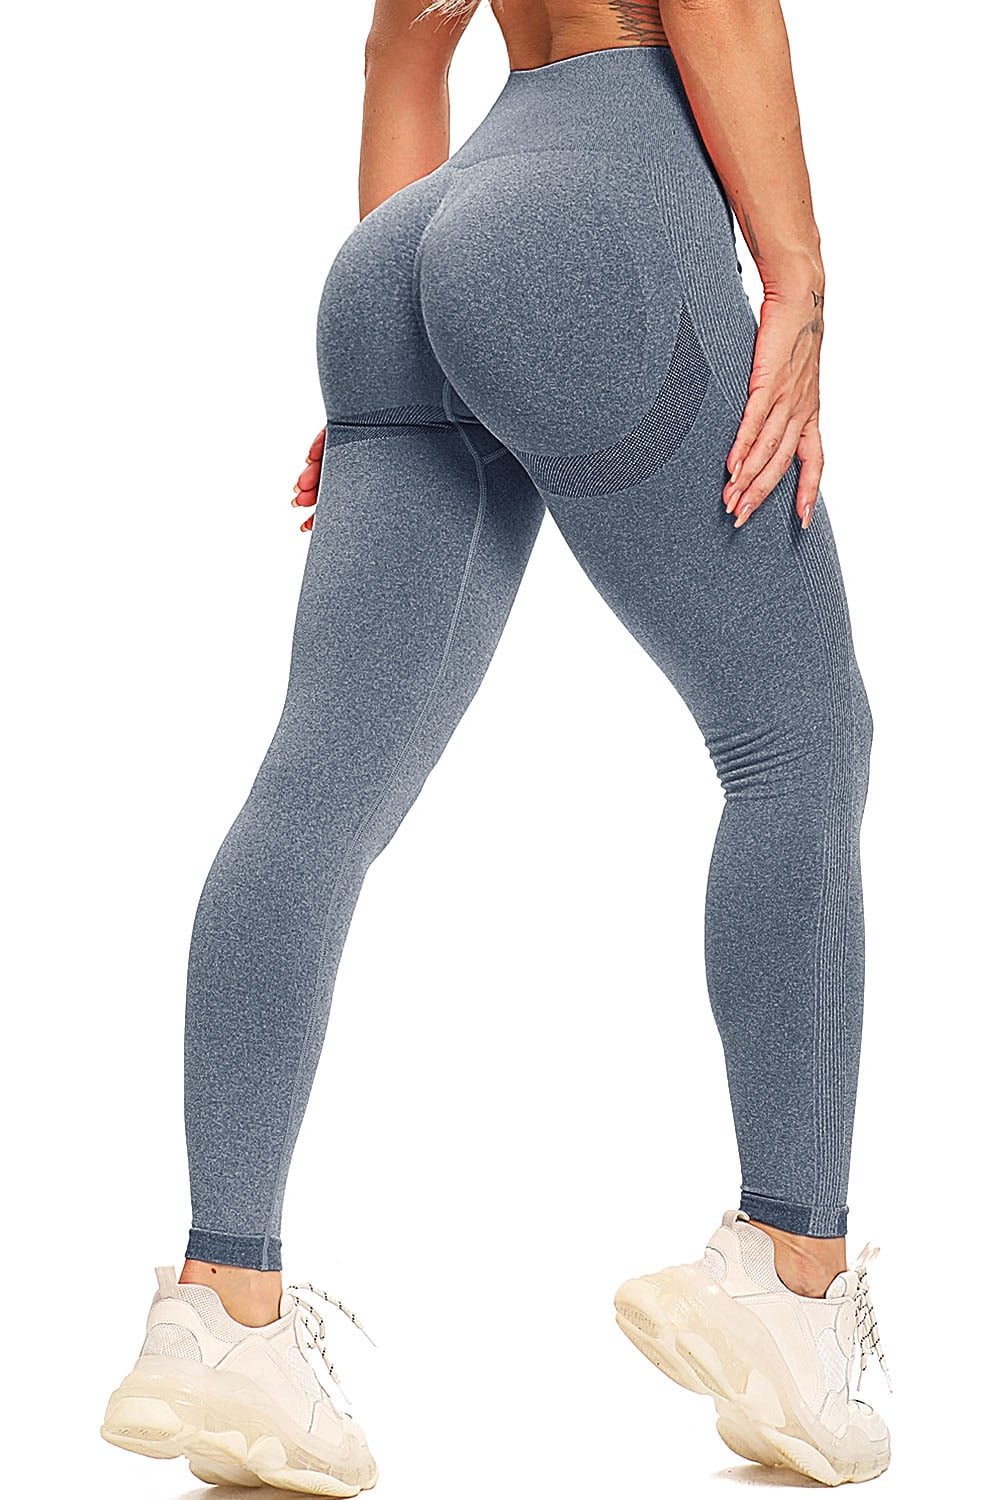 SEASUM Womens High Waist Leggings Ruched Butt Shapewear Tights Yoga Pants 